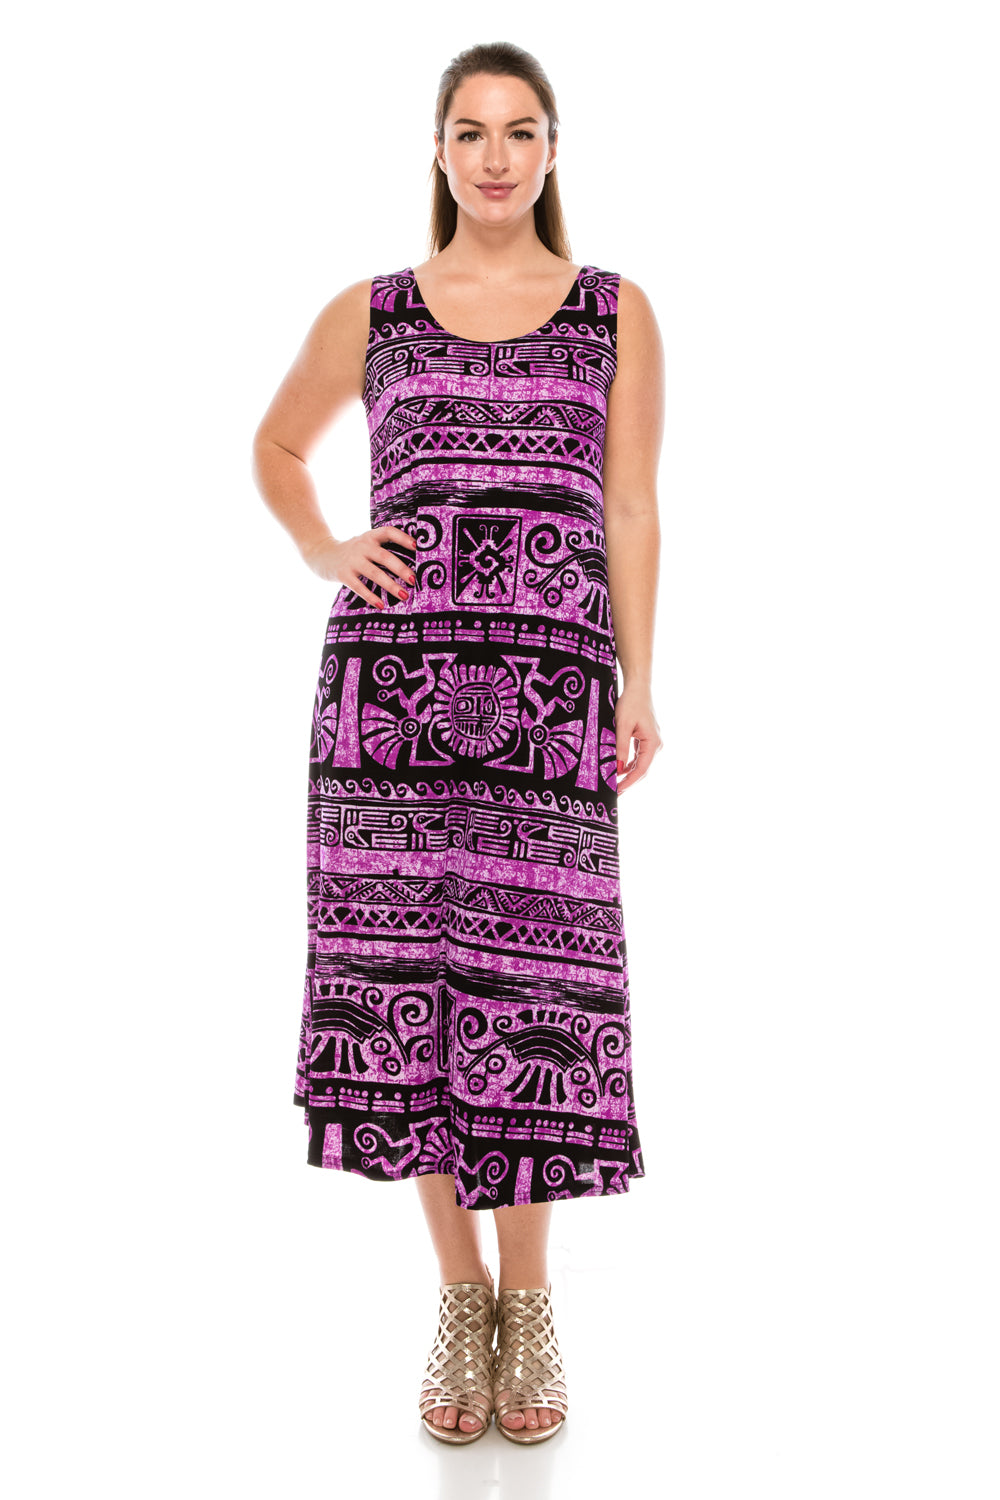 Jostar Women's Stretchy Long Tank Dress Print, 700BN-TP-W901 - Jostar Online